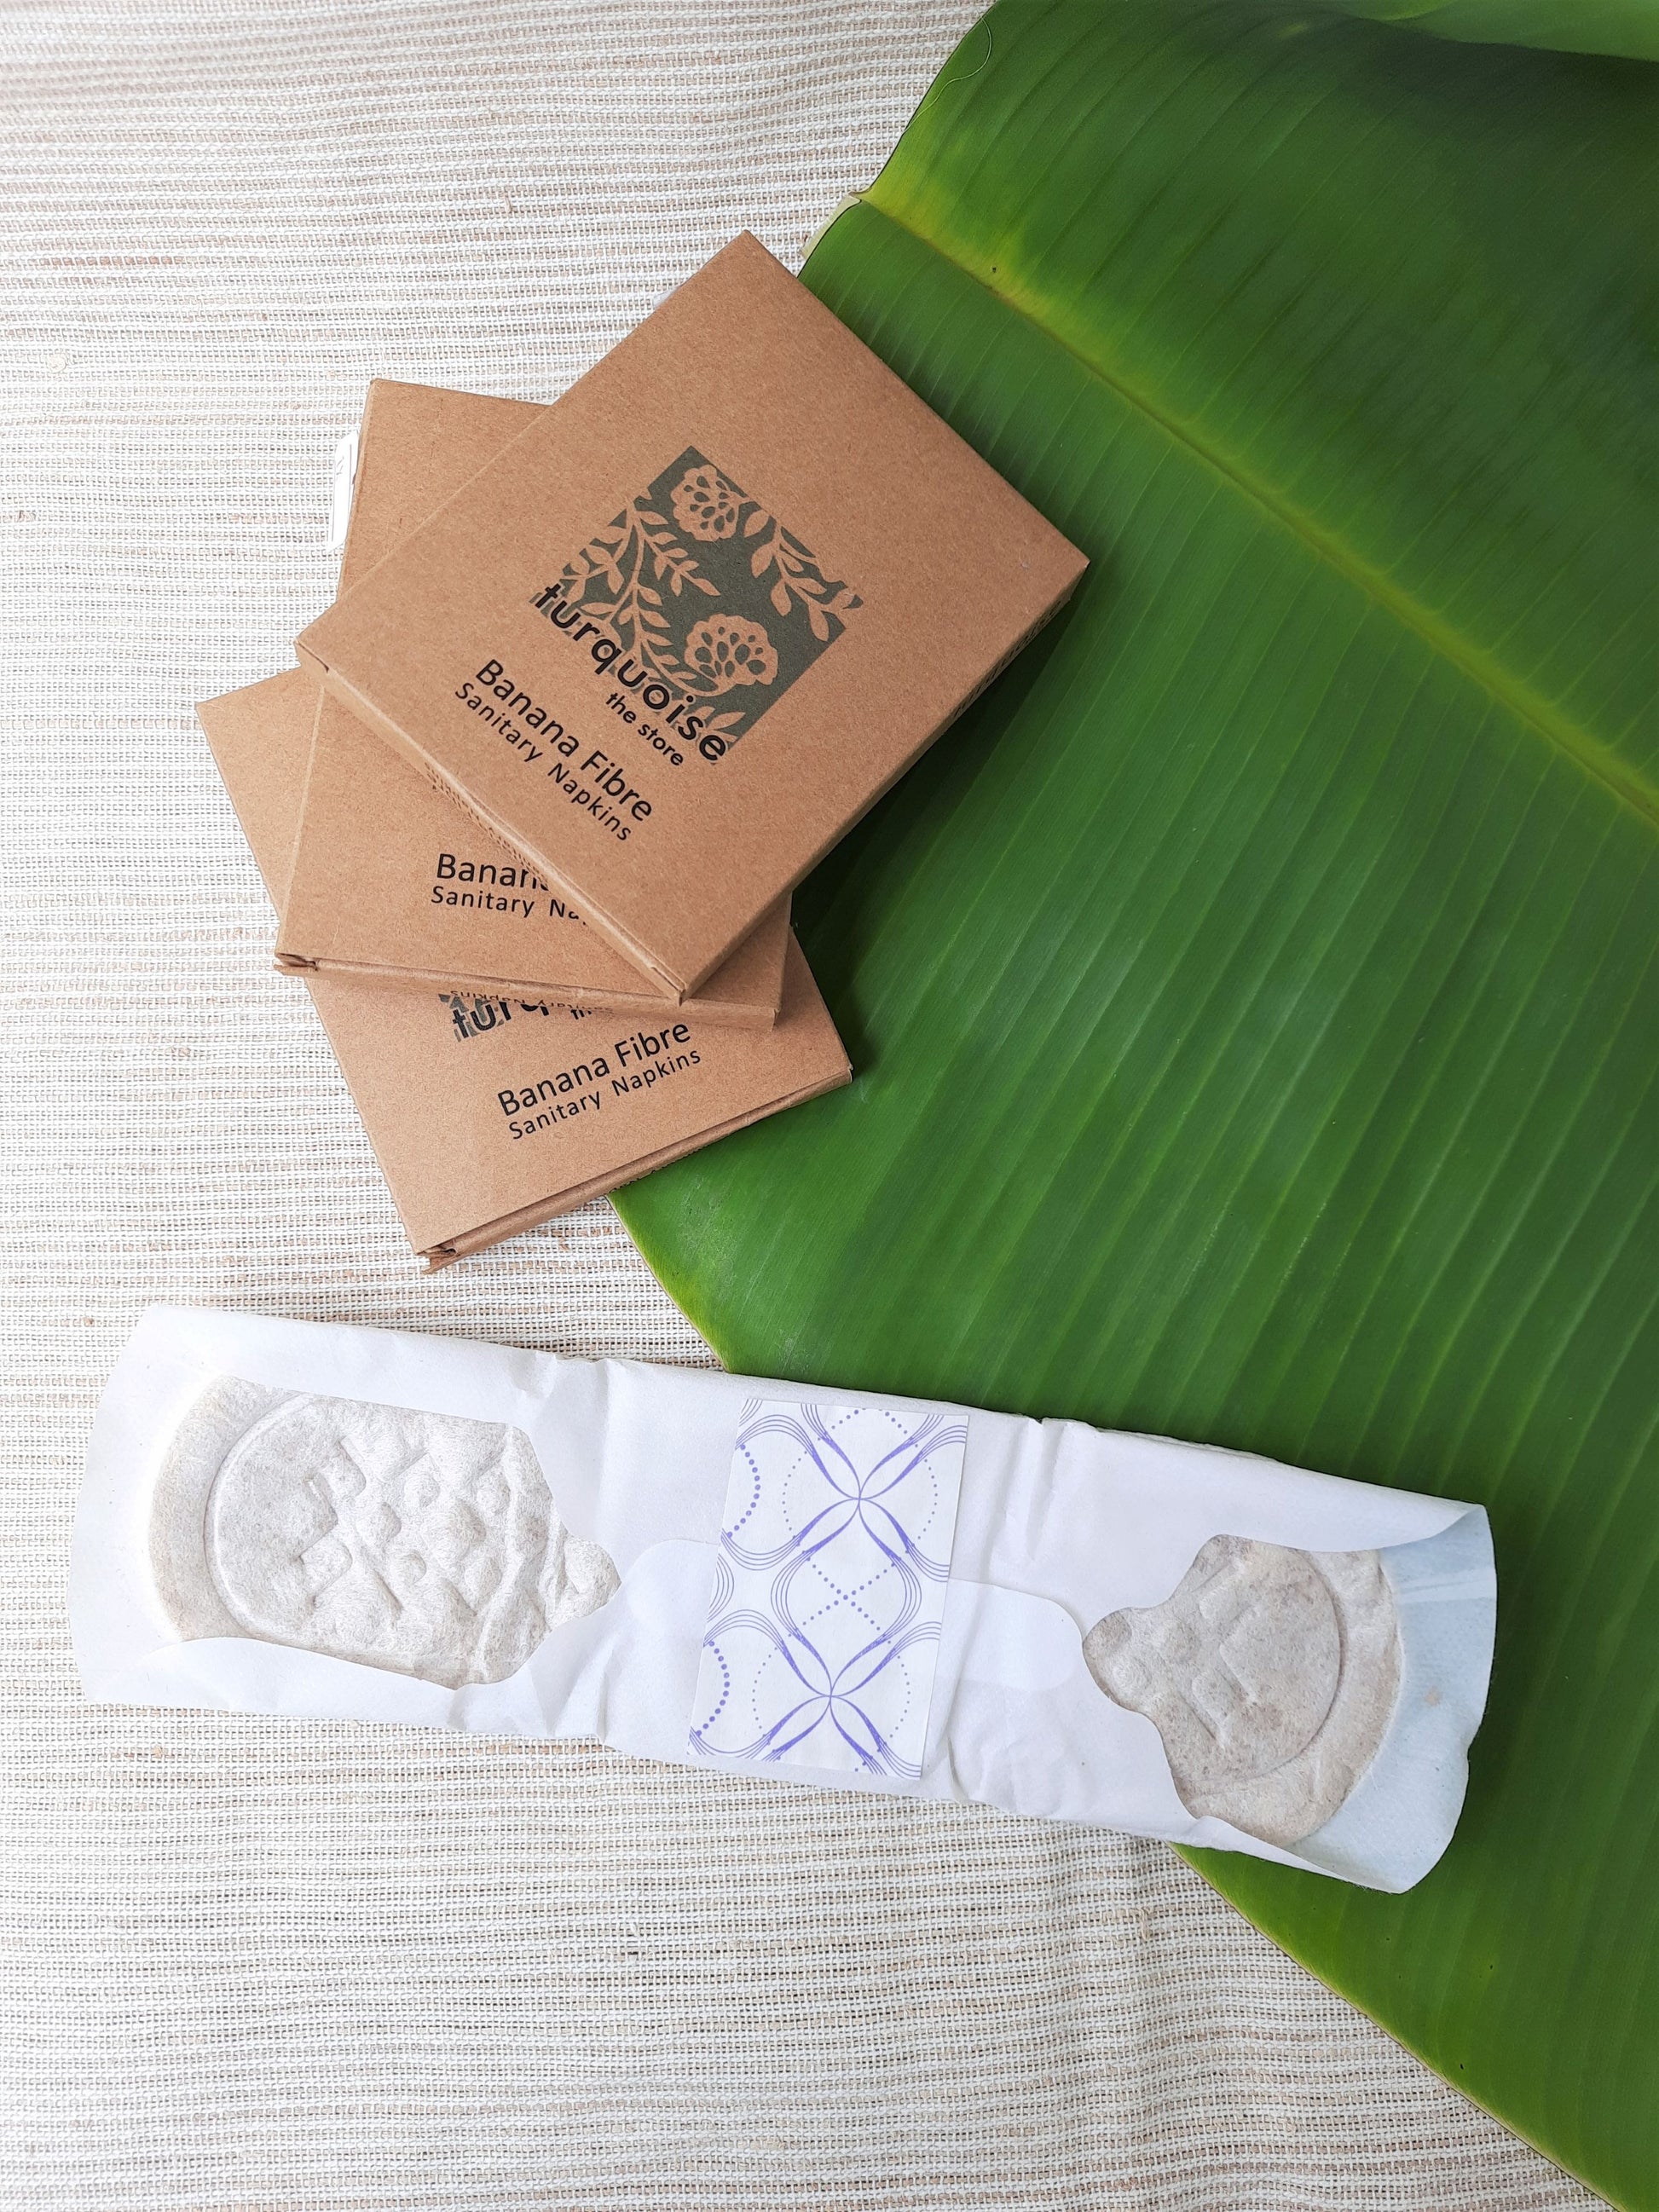 Banana fibre sanitary pads, Biodegradable banana fibre sanitary pads, Vegan and cruelty free sanitary pads, Handmade eco friendly banana fibre sanitary pads